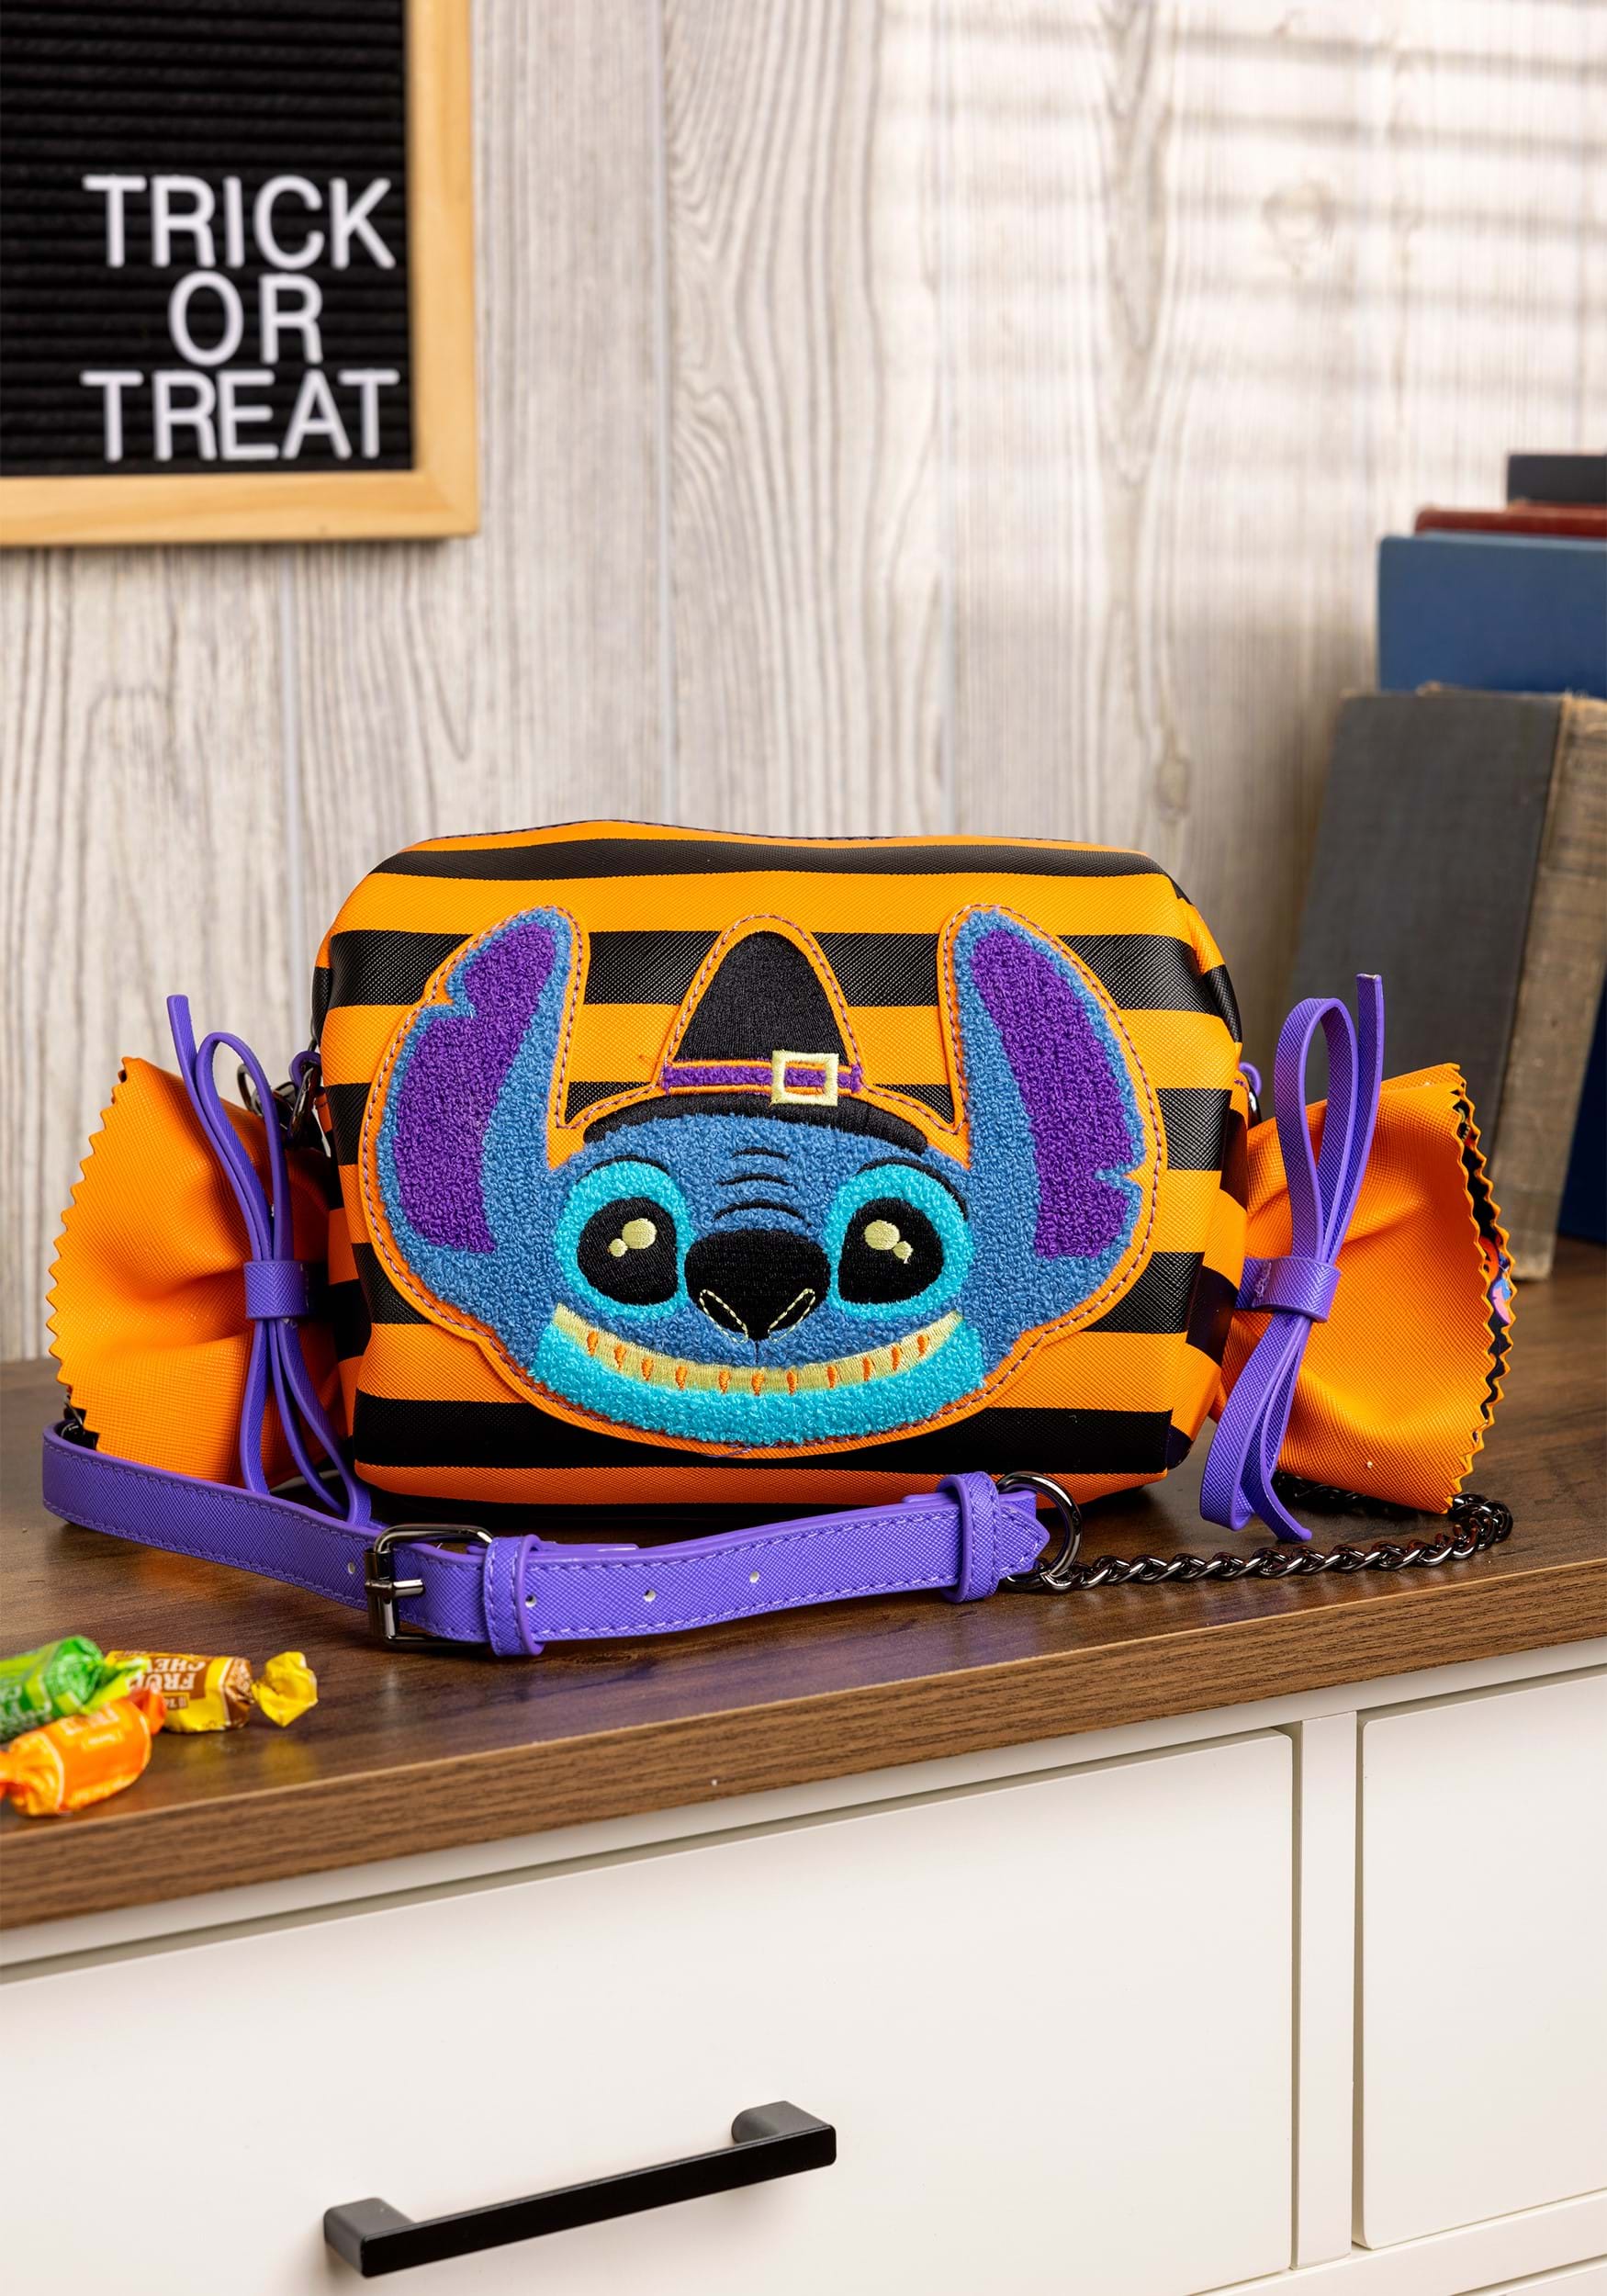 Loungefly Disney Lilo And Stitch Striped Halloween Bag